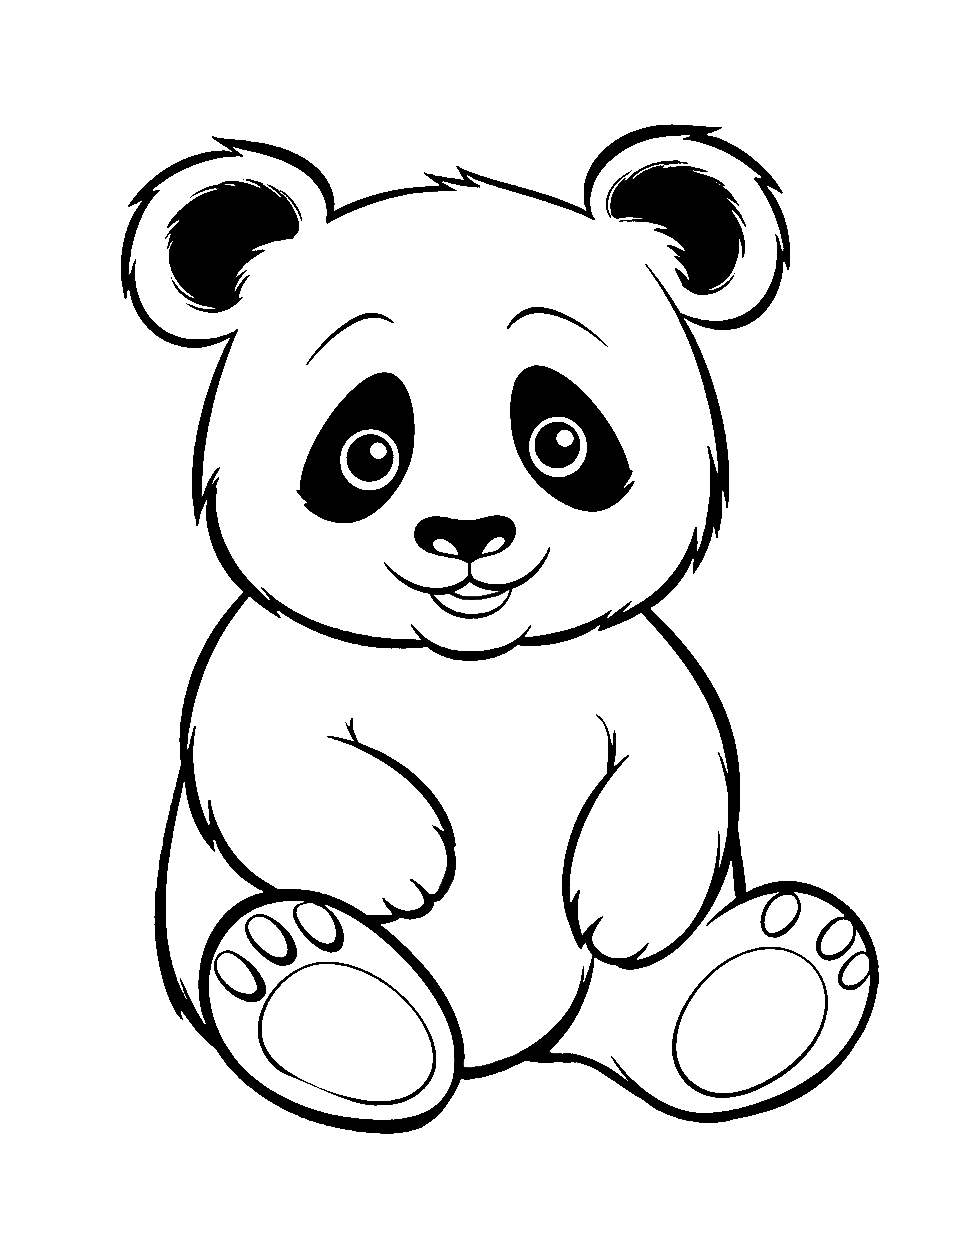 Playful Baby Panda Coloring Page - A cute baby panda sitting with a joyful expression.